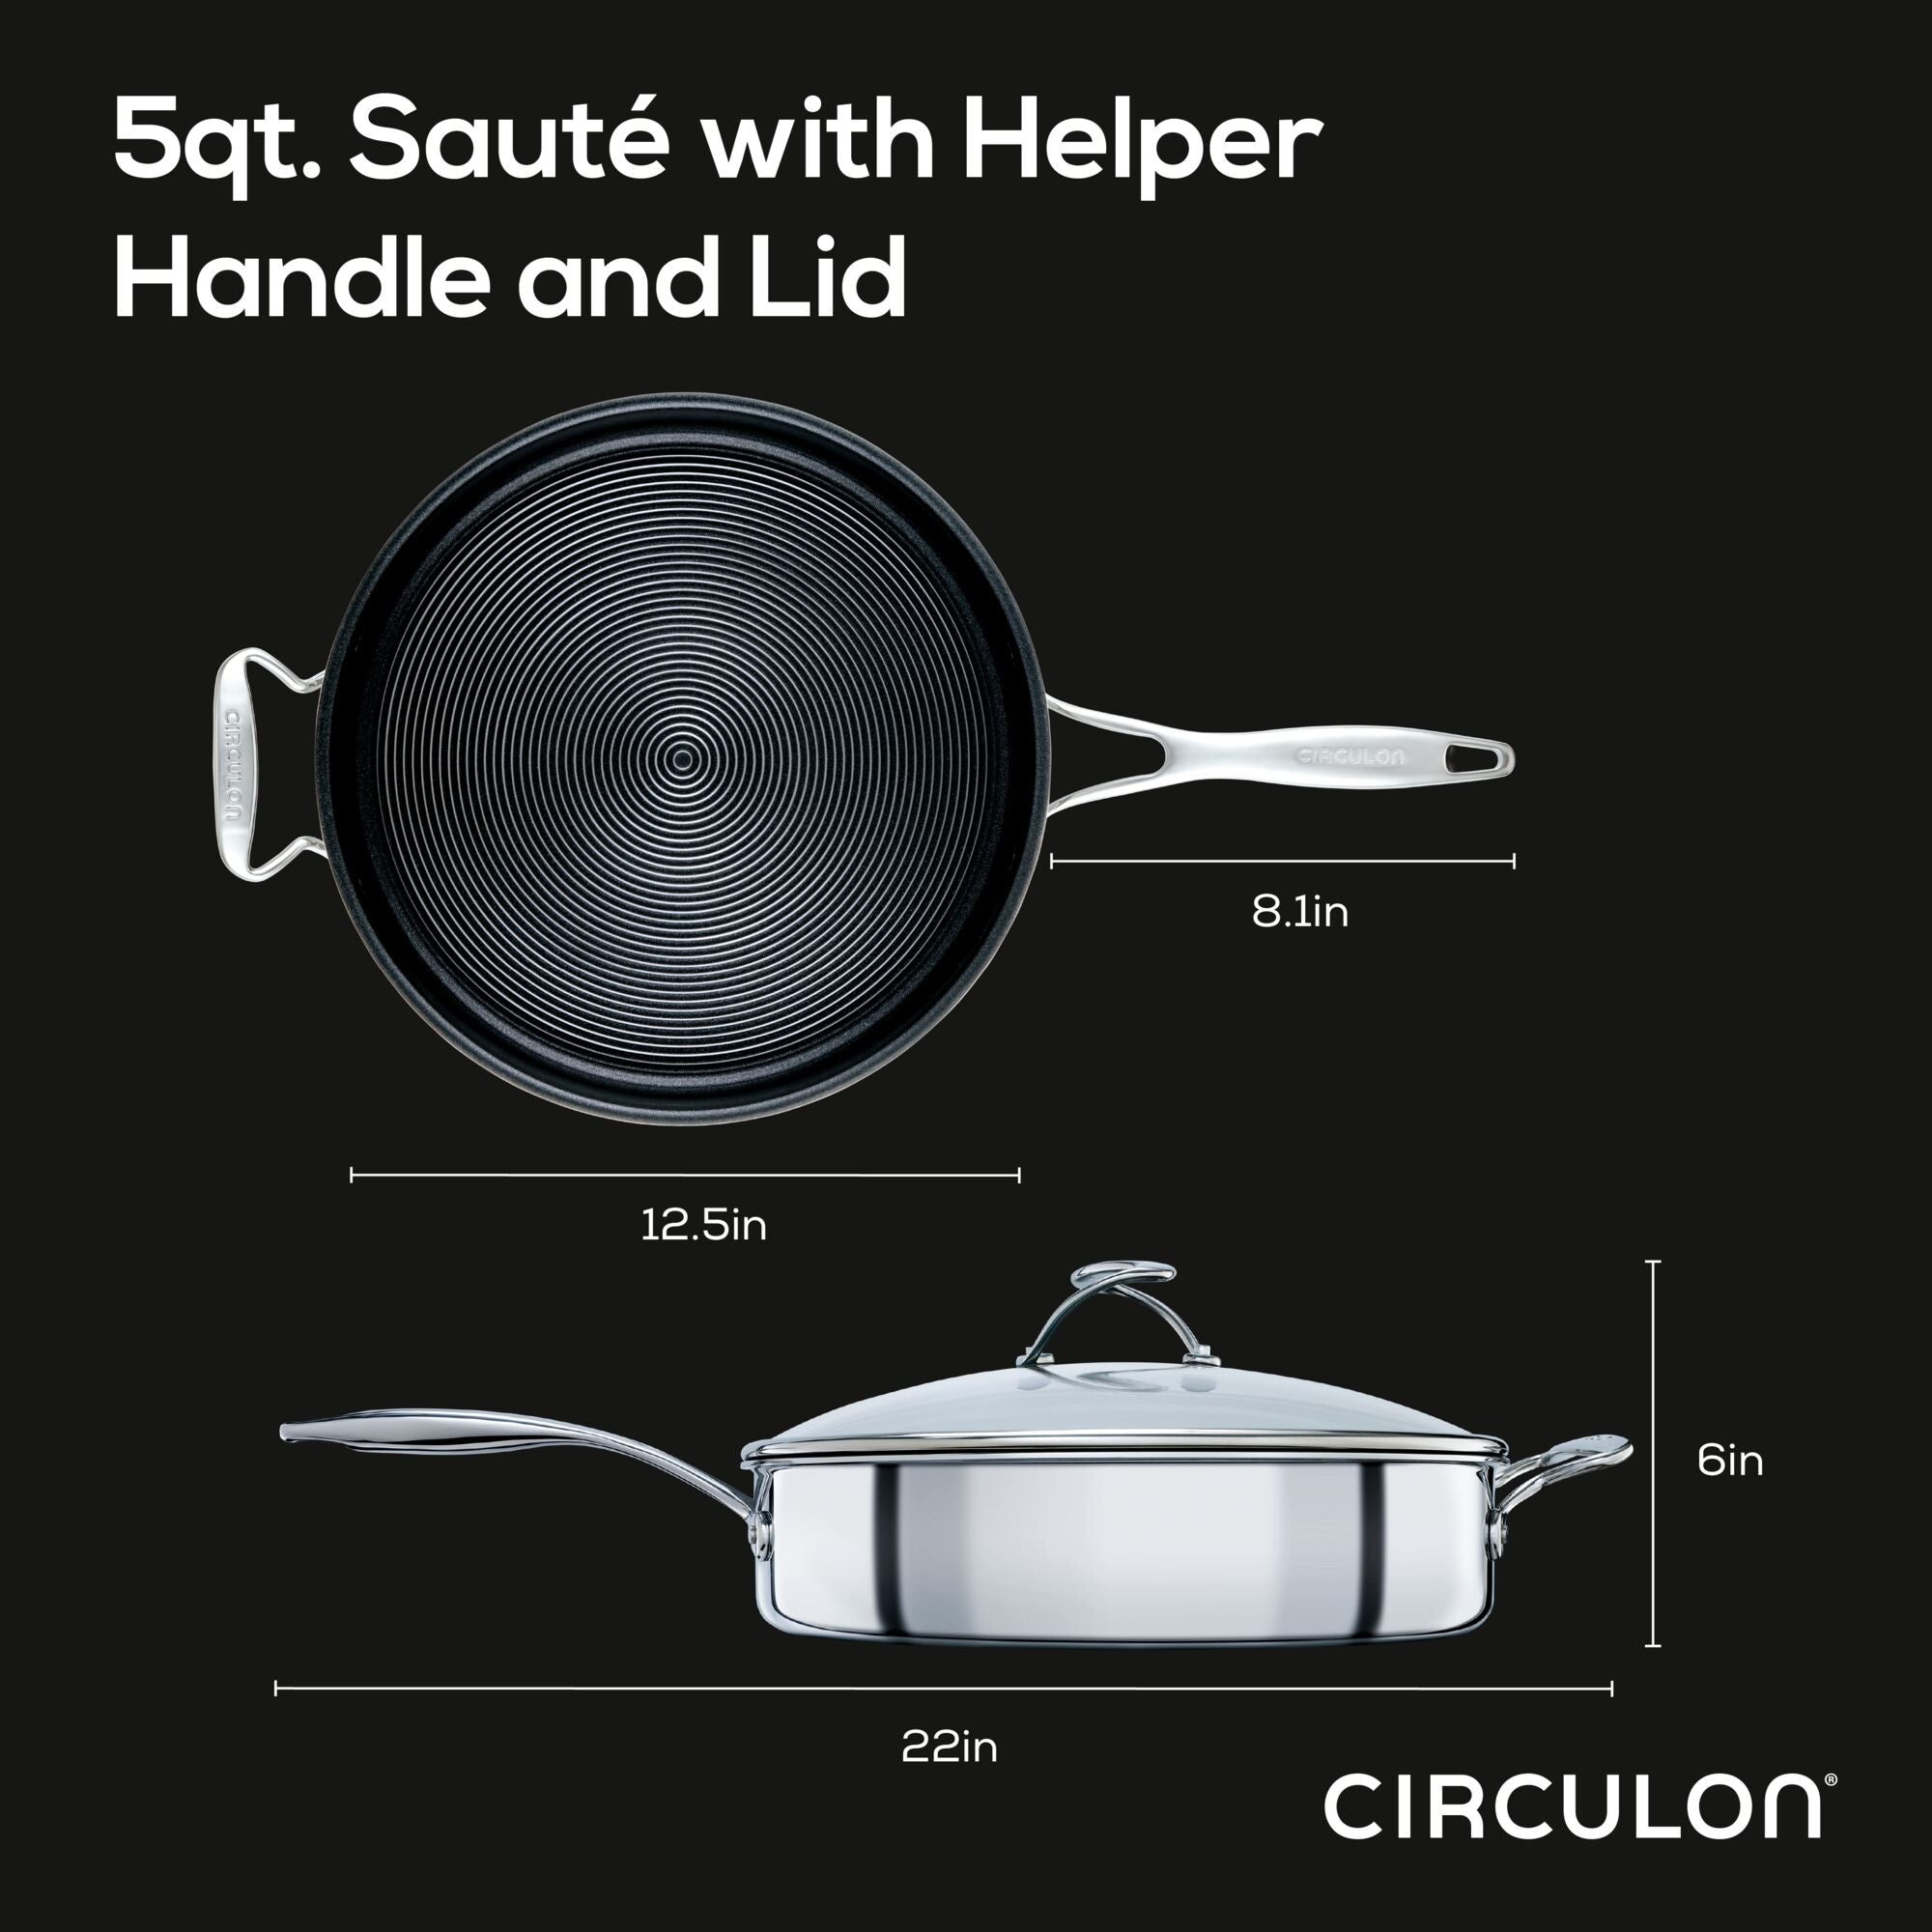 Circulon SteelShield C-Series Frying Pan review